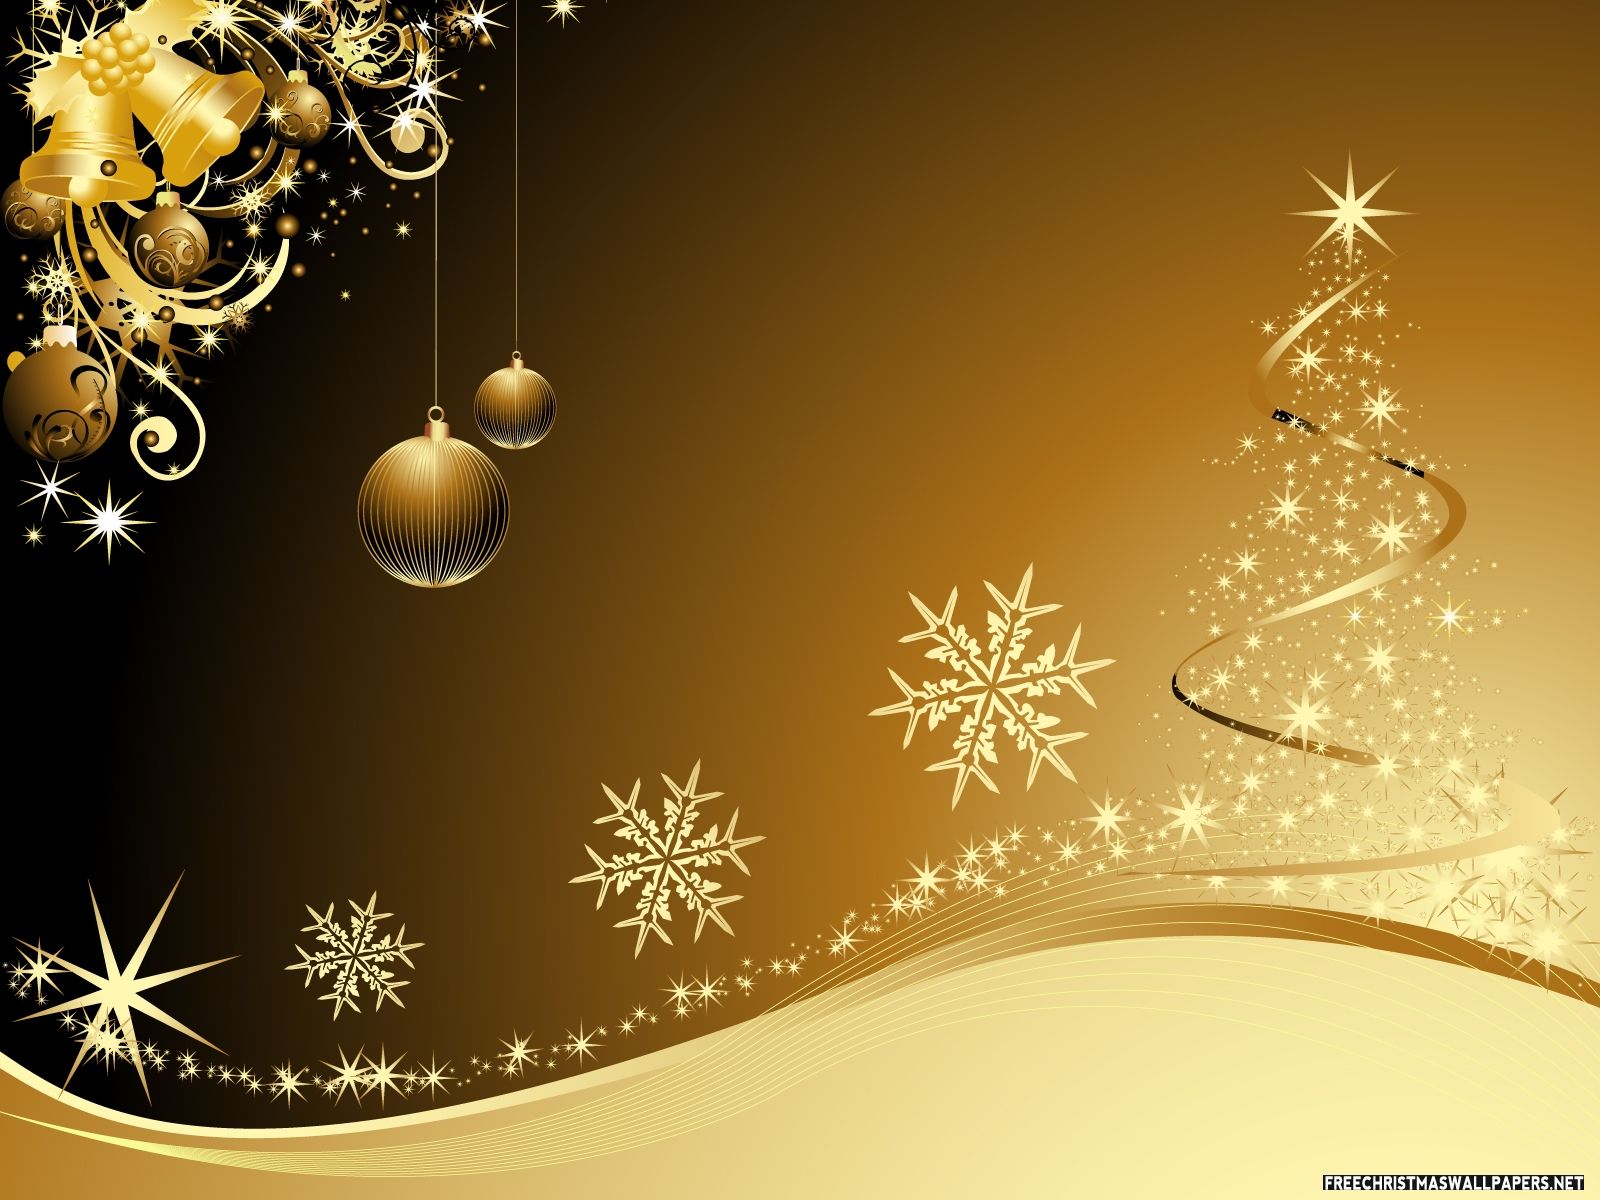 Golden Christmas | Christmas wallpaper free, Christmas wallpaper and ...